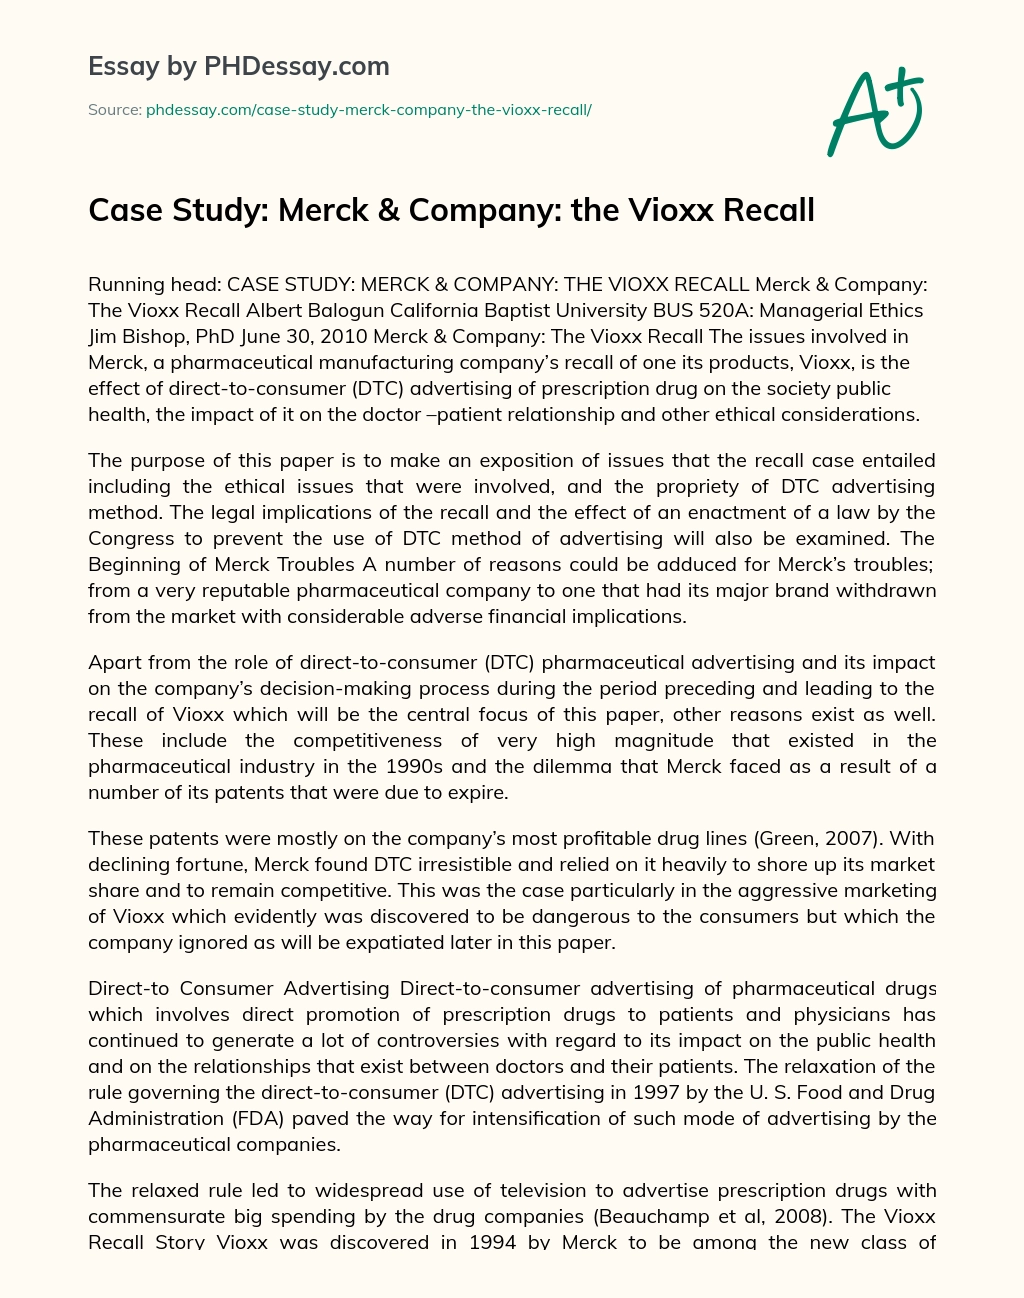 Case Study: Merck & Company: the Vioxx Recall essay